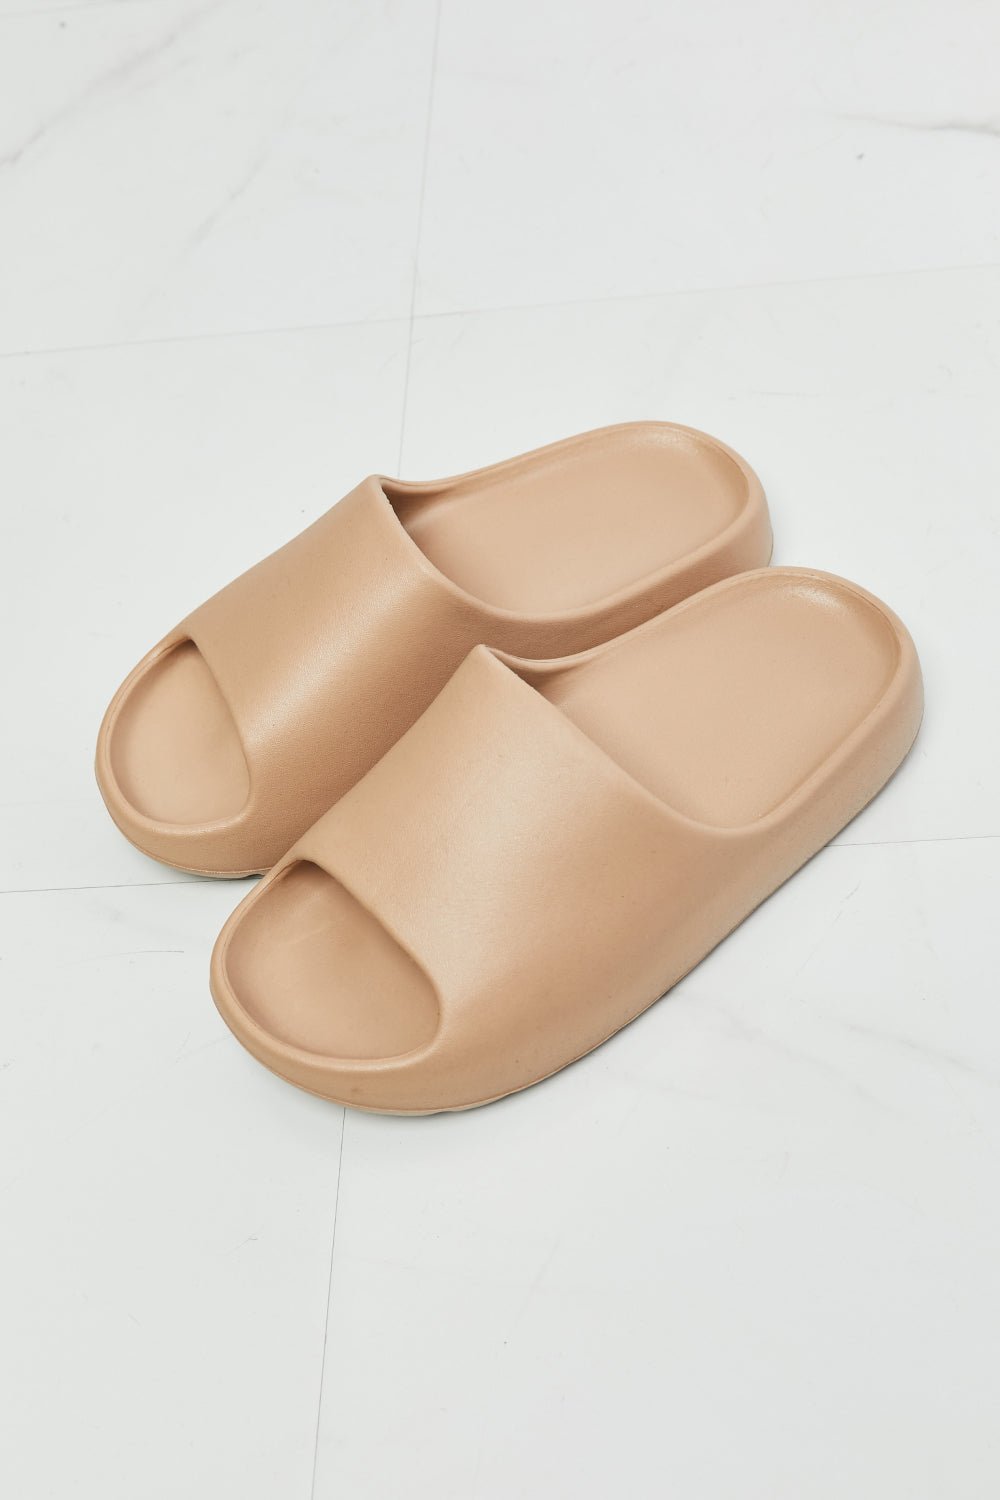 Open Toe Rubber Slide Sandals in SandSlidesNOOK JOI